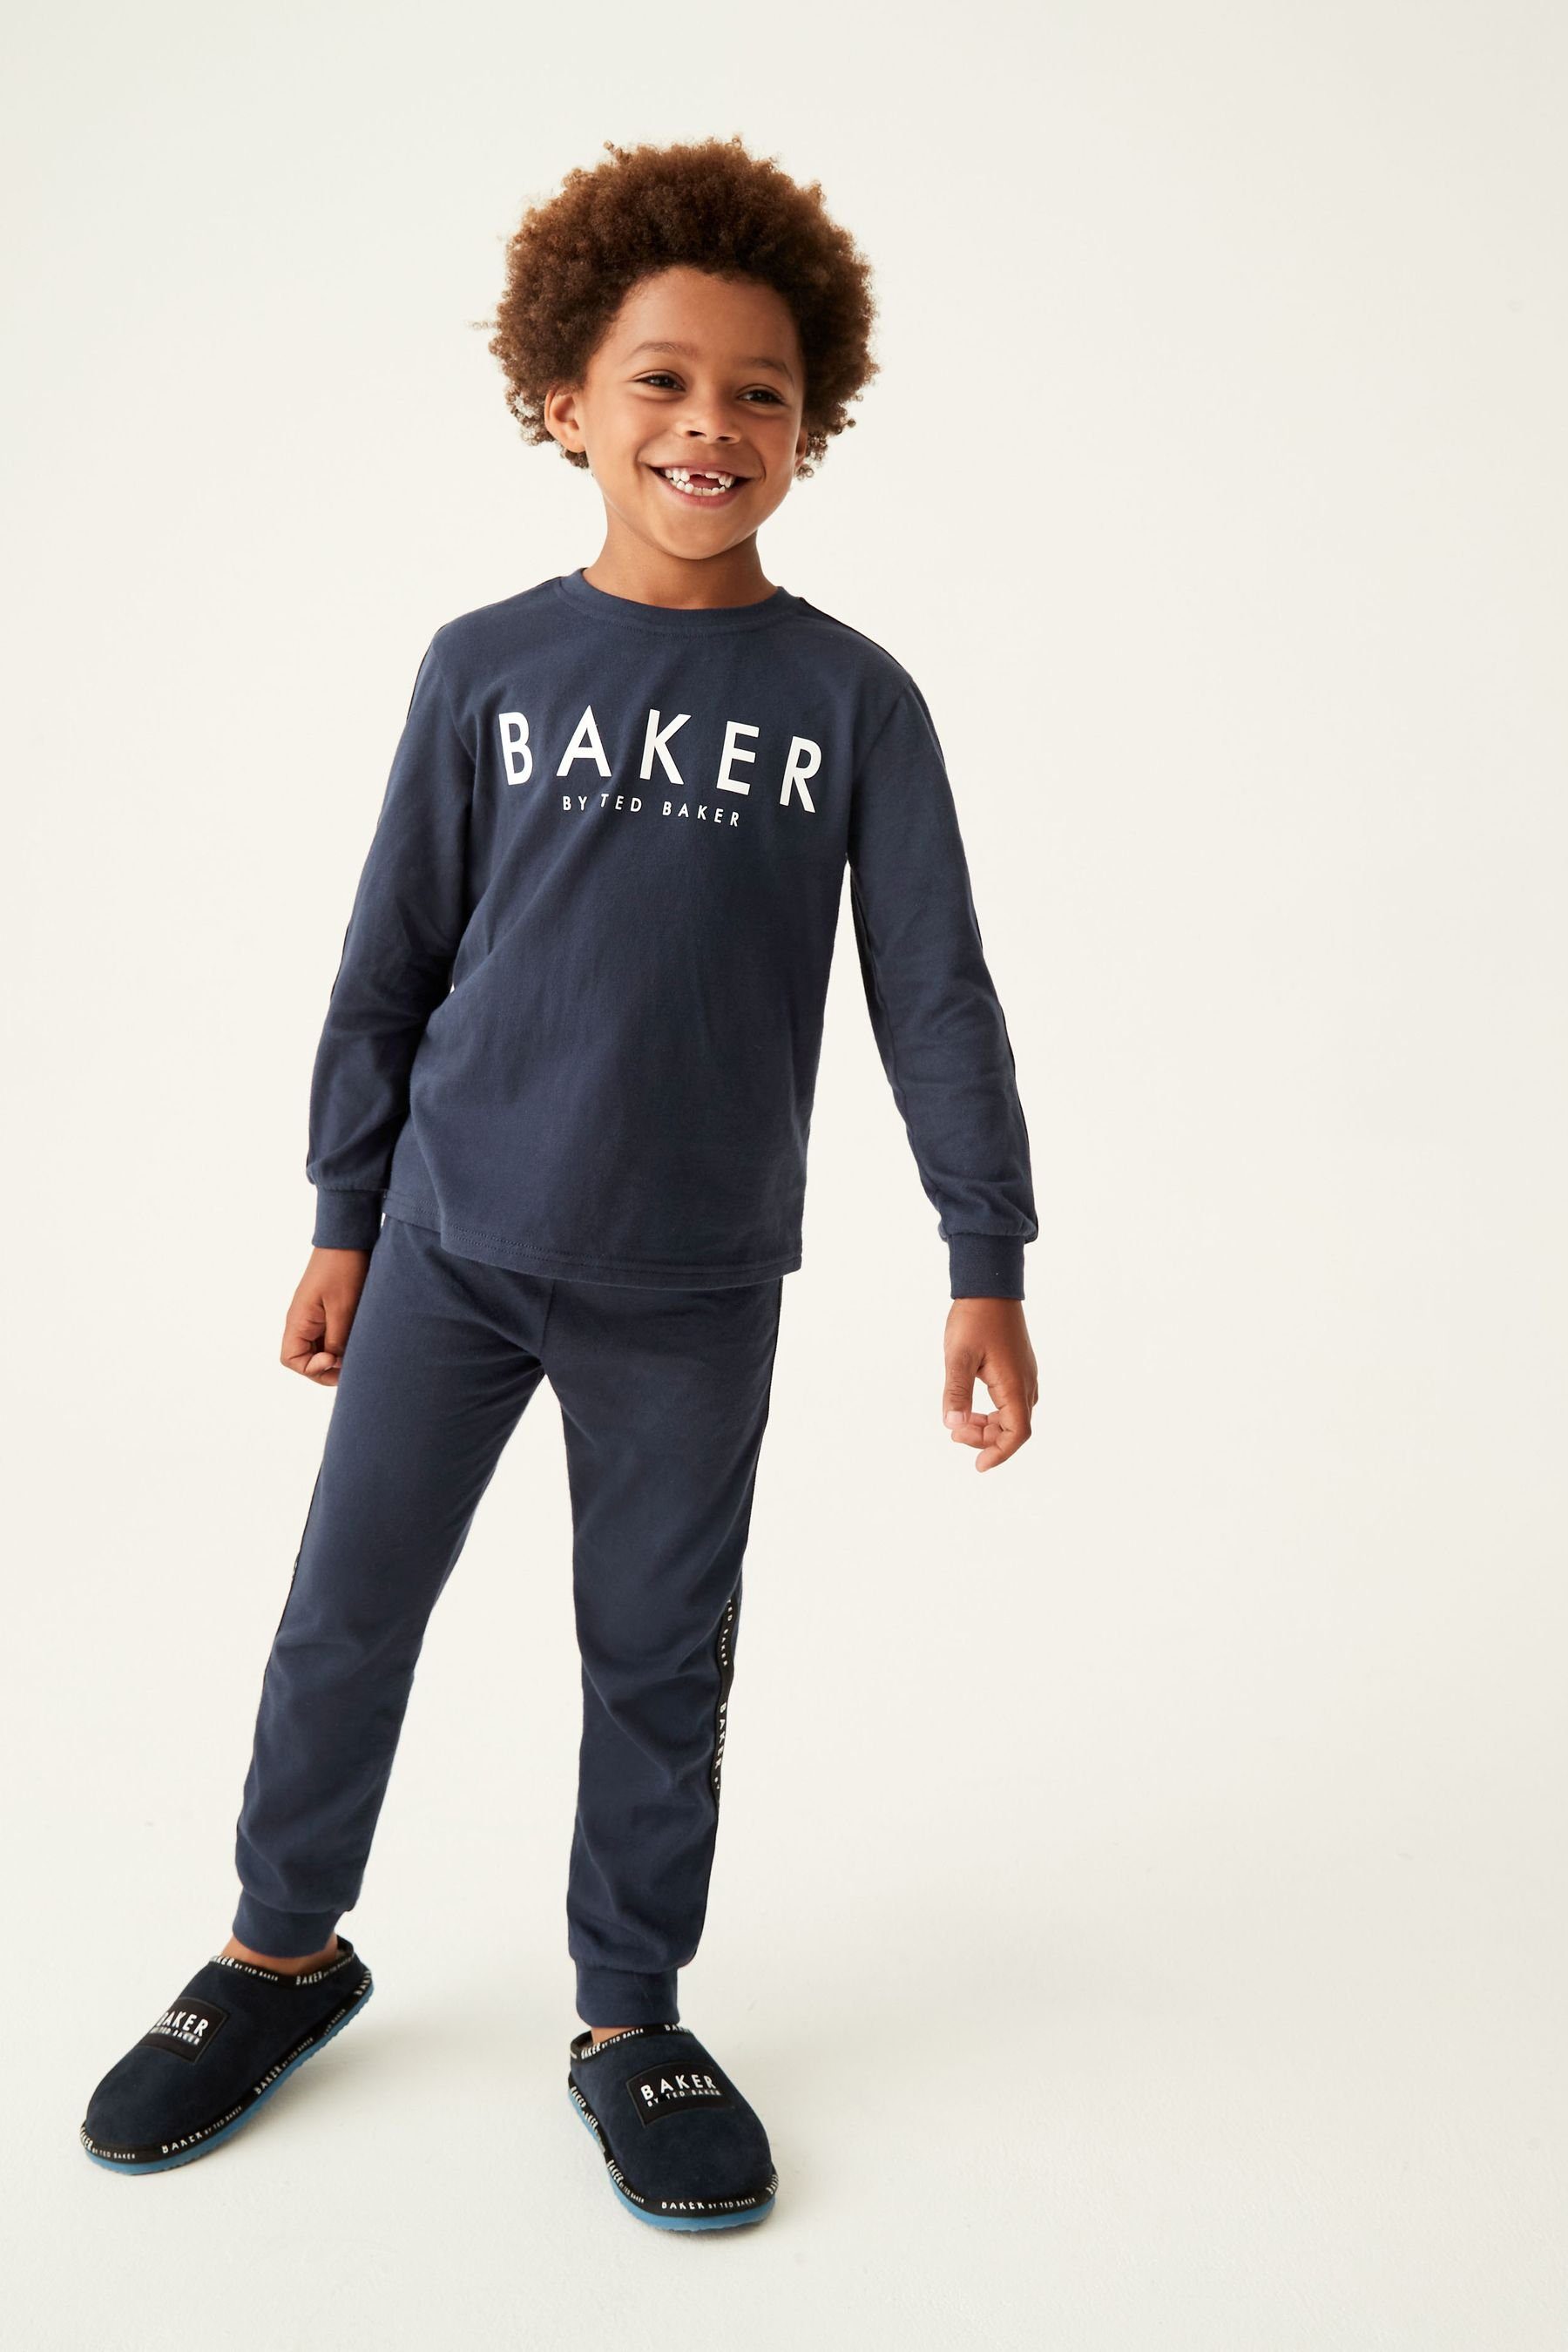 Baker Baker tlg) Ted Baker (2 Ted by Pyjama Pyjama Baker by